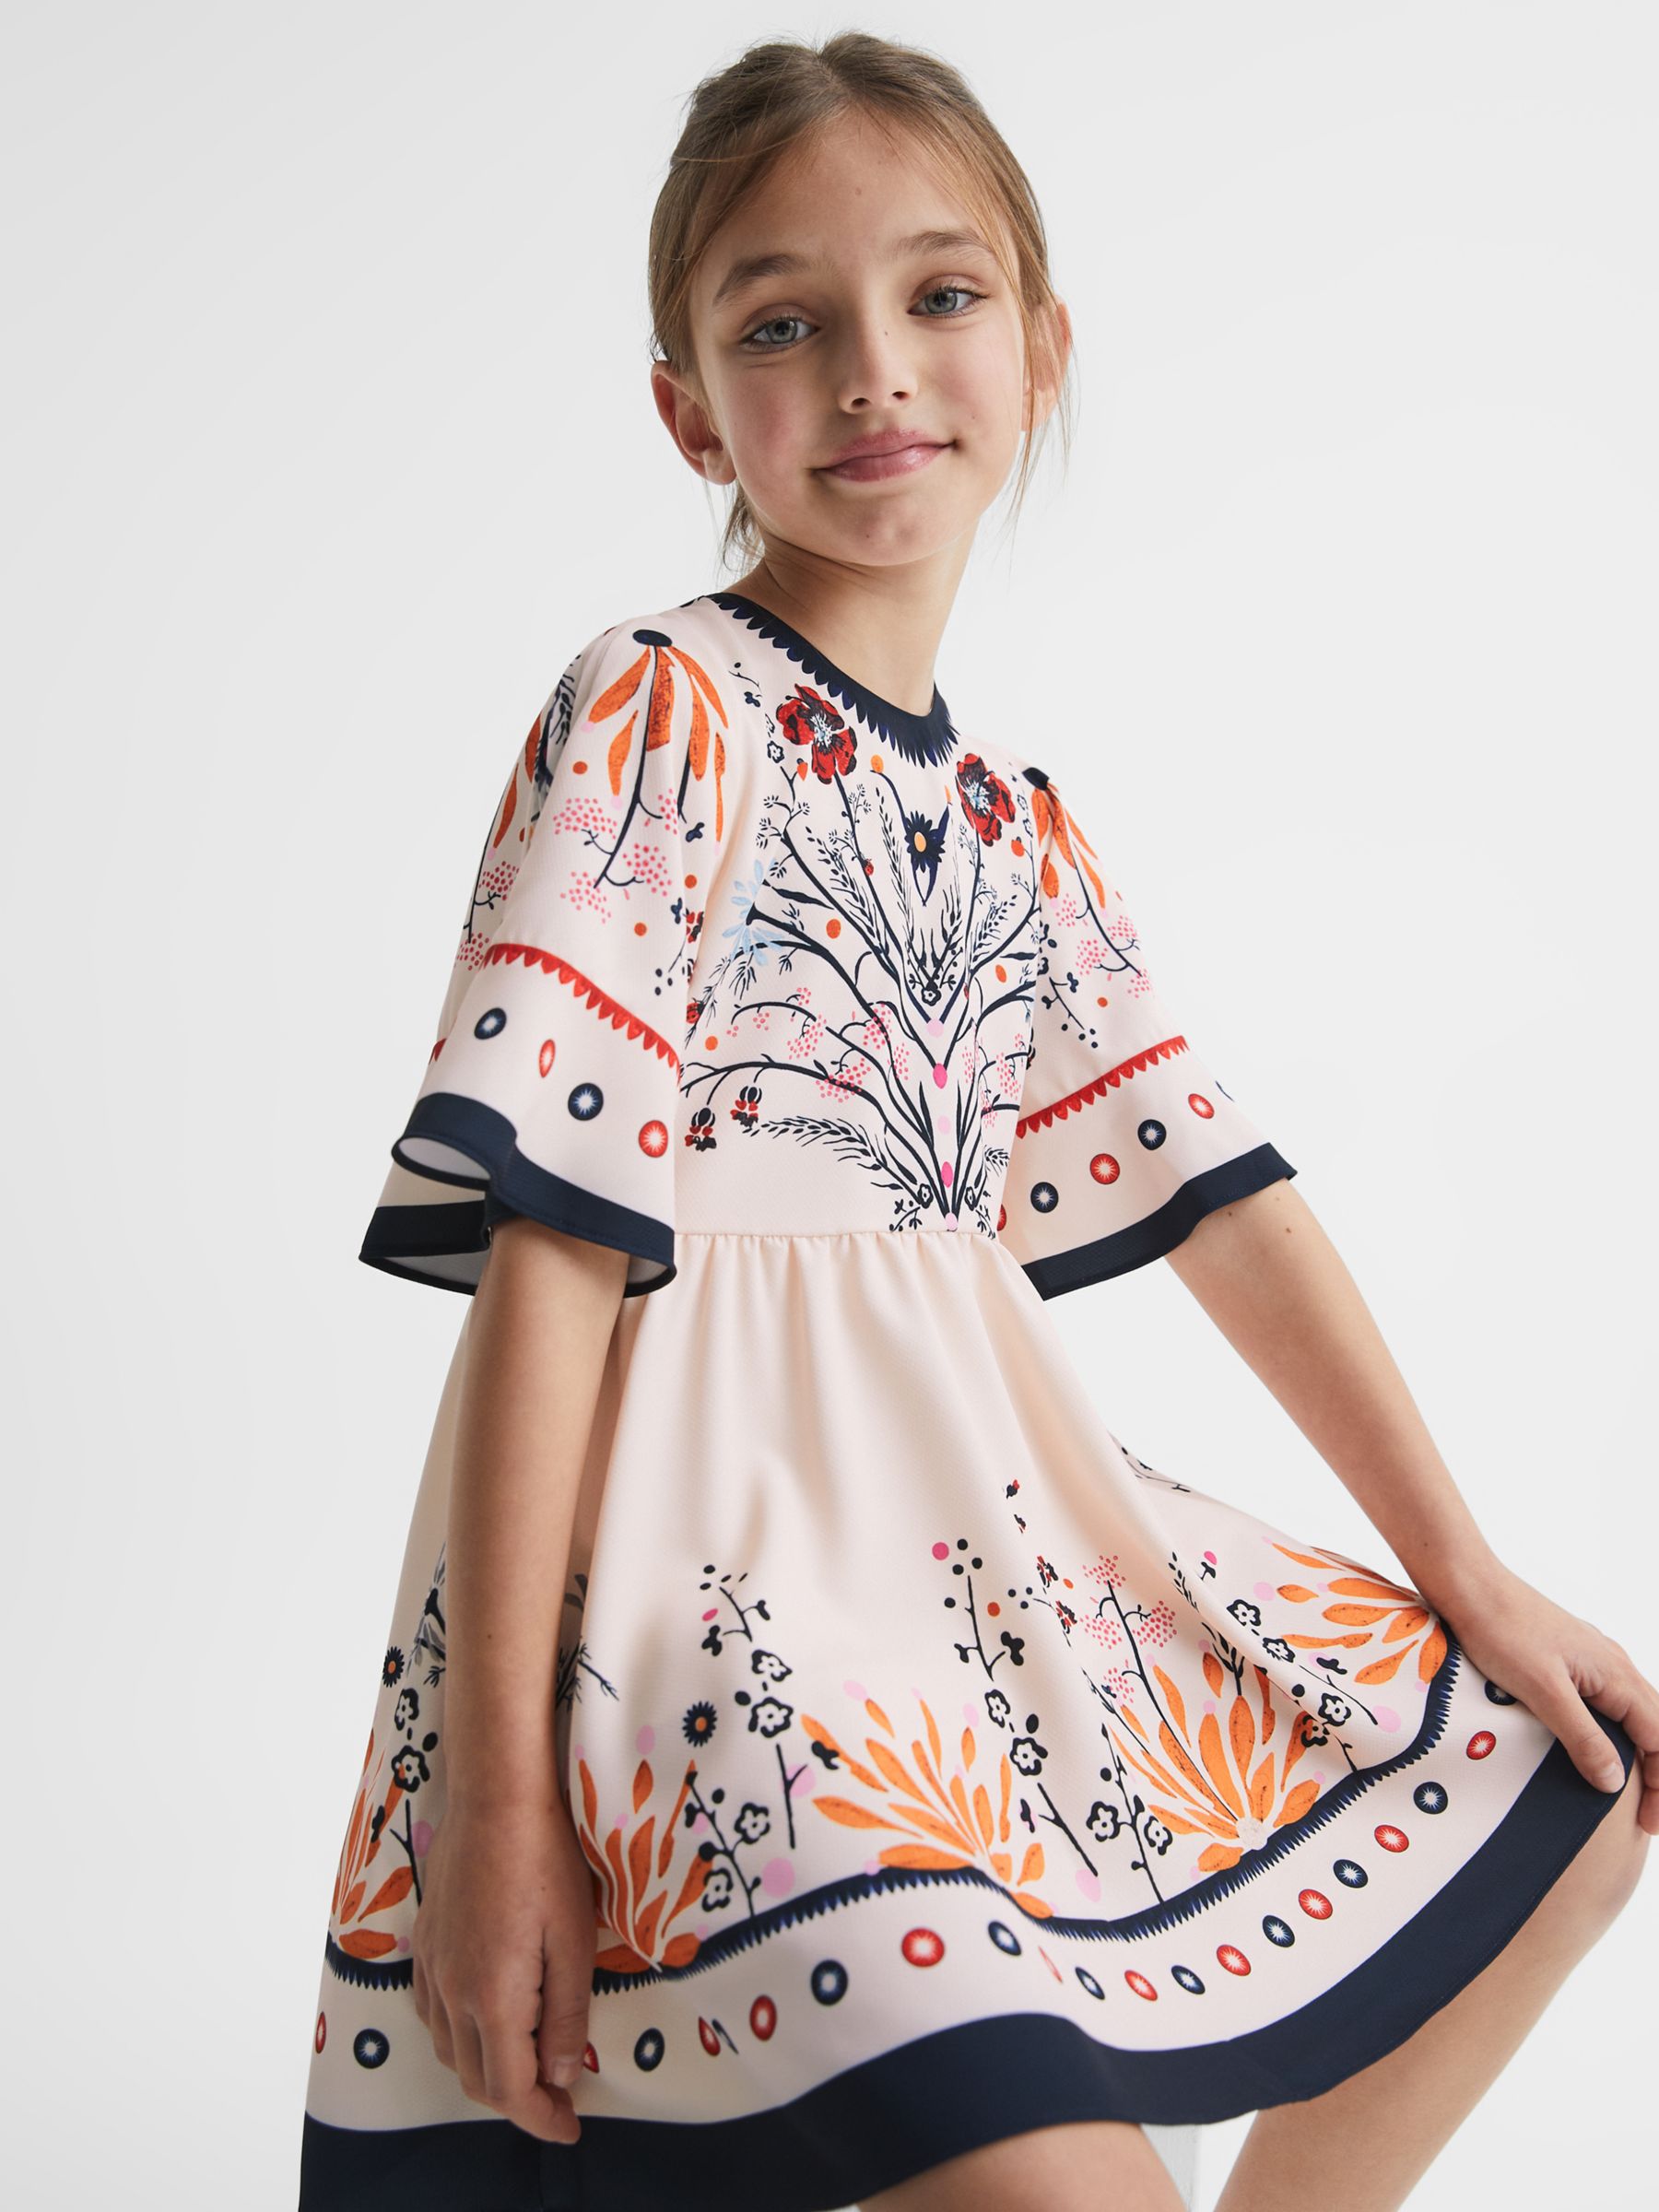 Reiss Kids' Ania Floral Print Dress at John Lewis & Partners